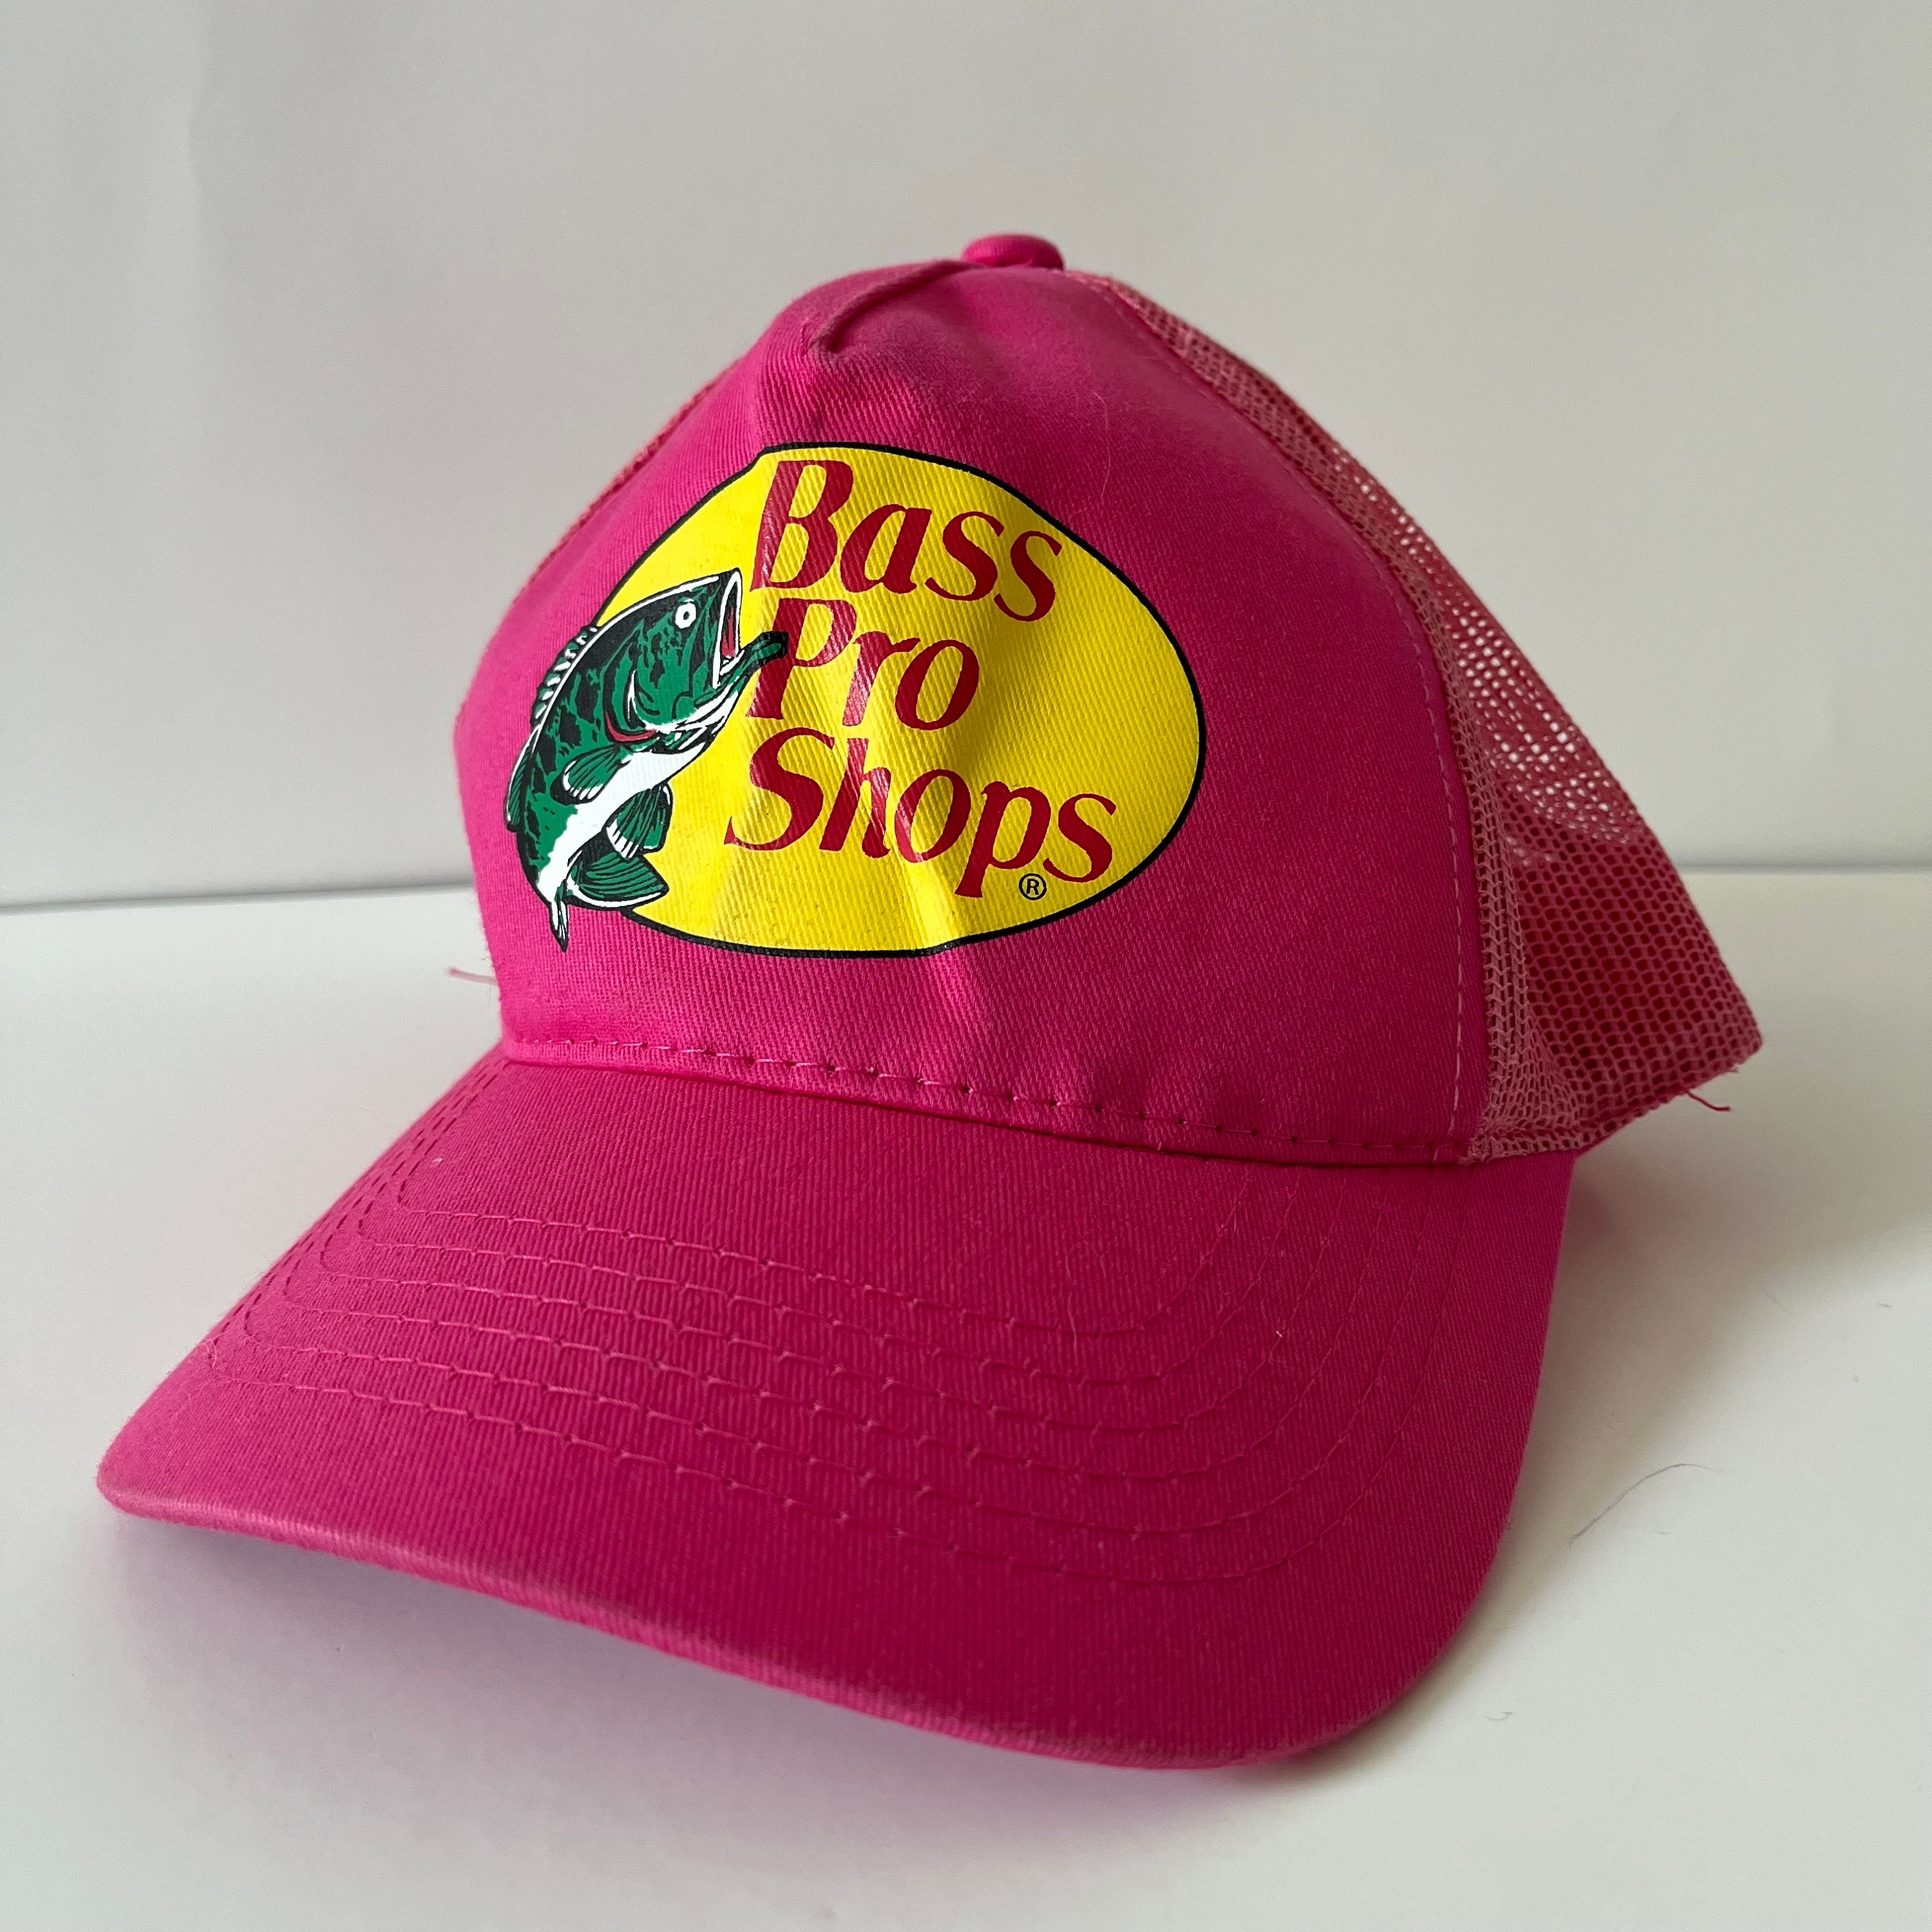 Vintage Bass Pro Shop Mesh Trucker Hat Adjustable Baseball Cap One